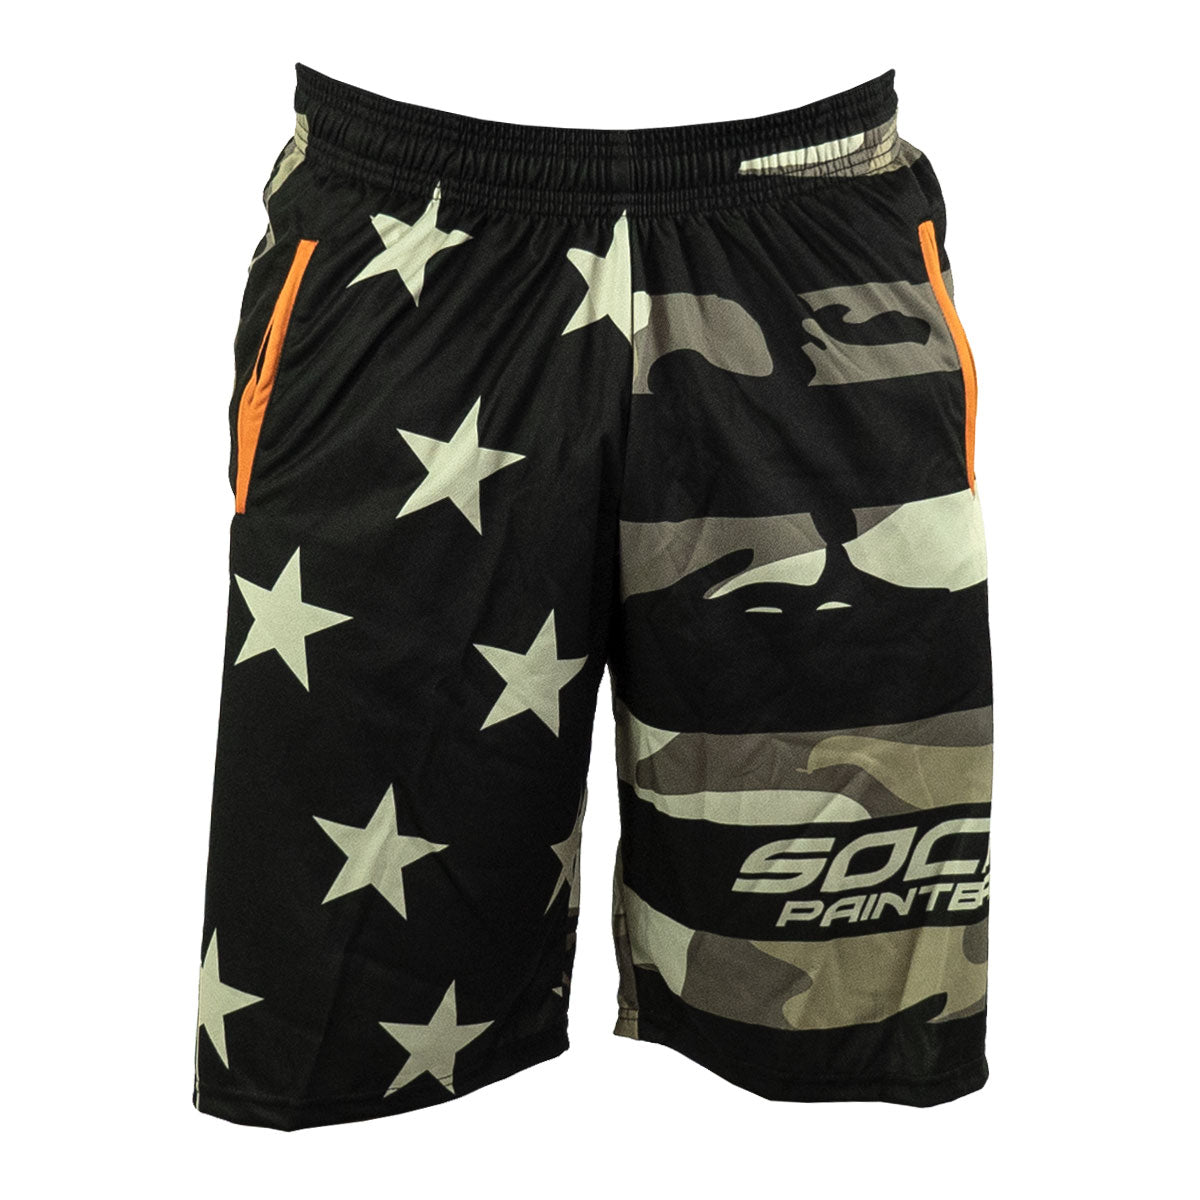 Social Paintball Grit Shorts - American Camo